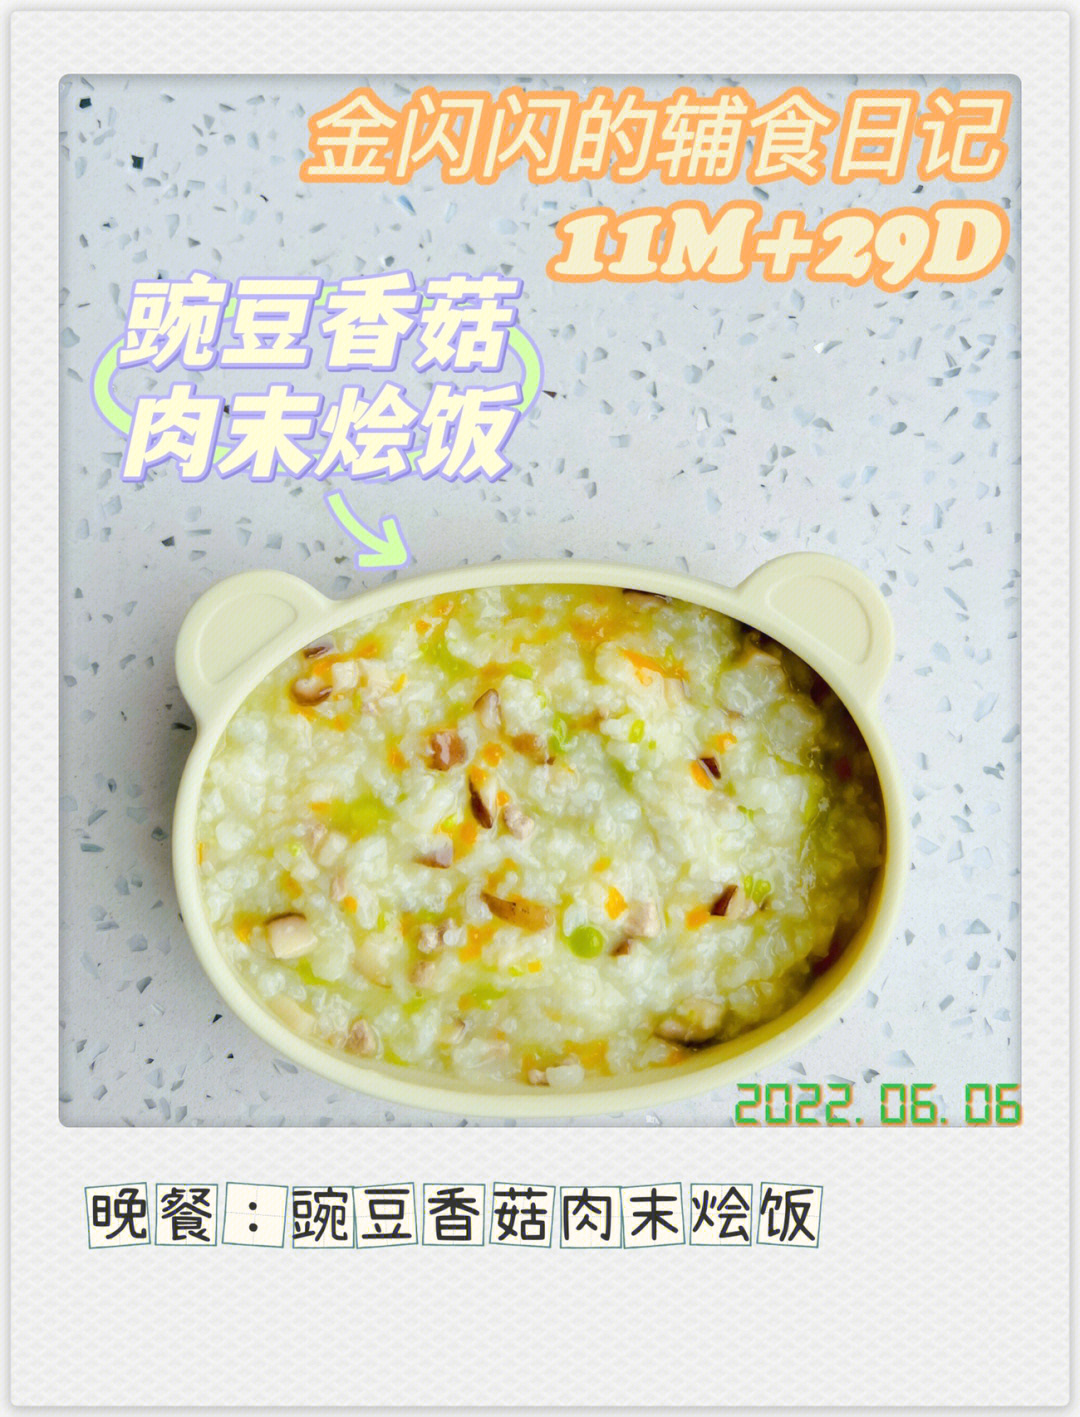 11m29d豌豆香菇肉末烩饭